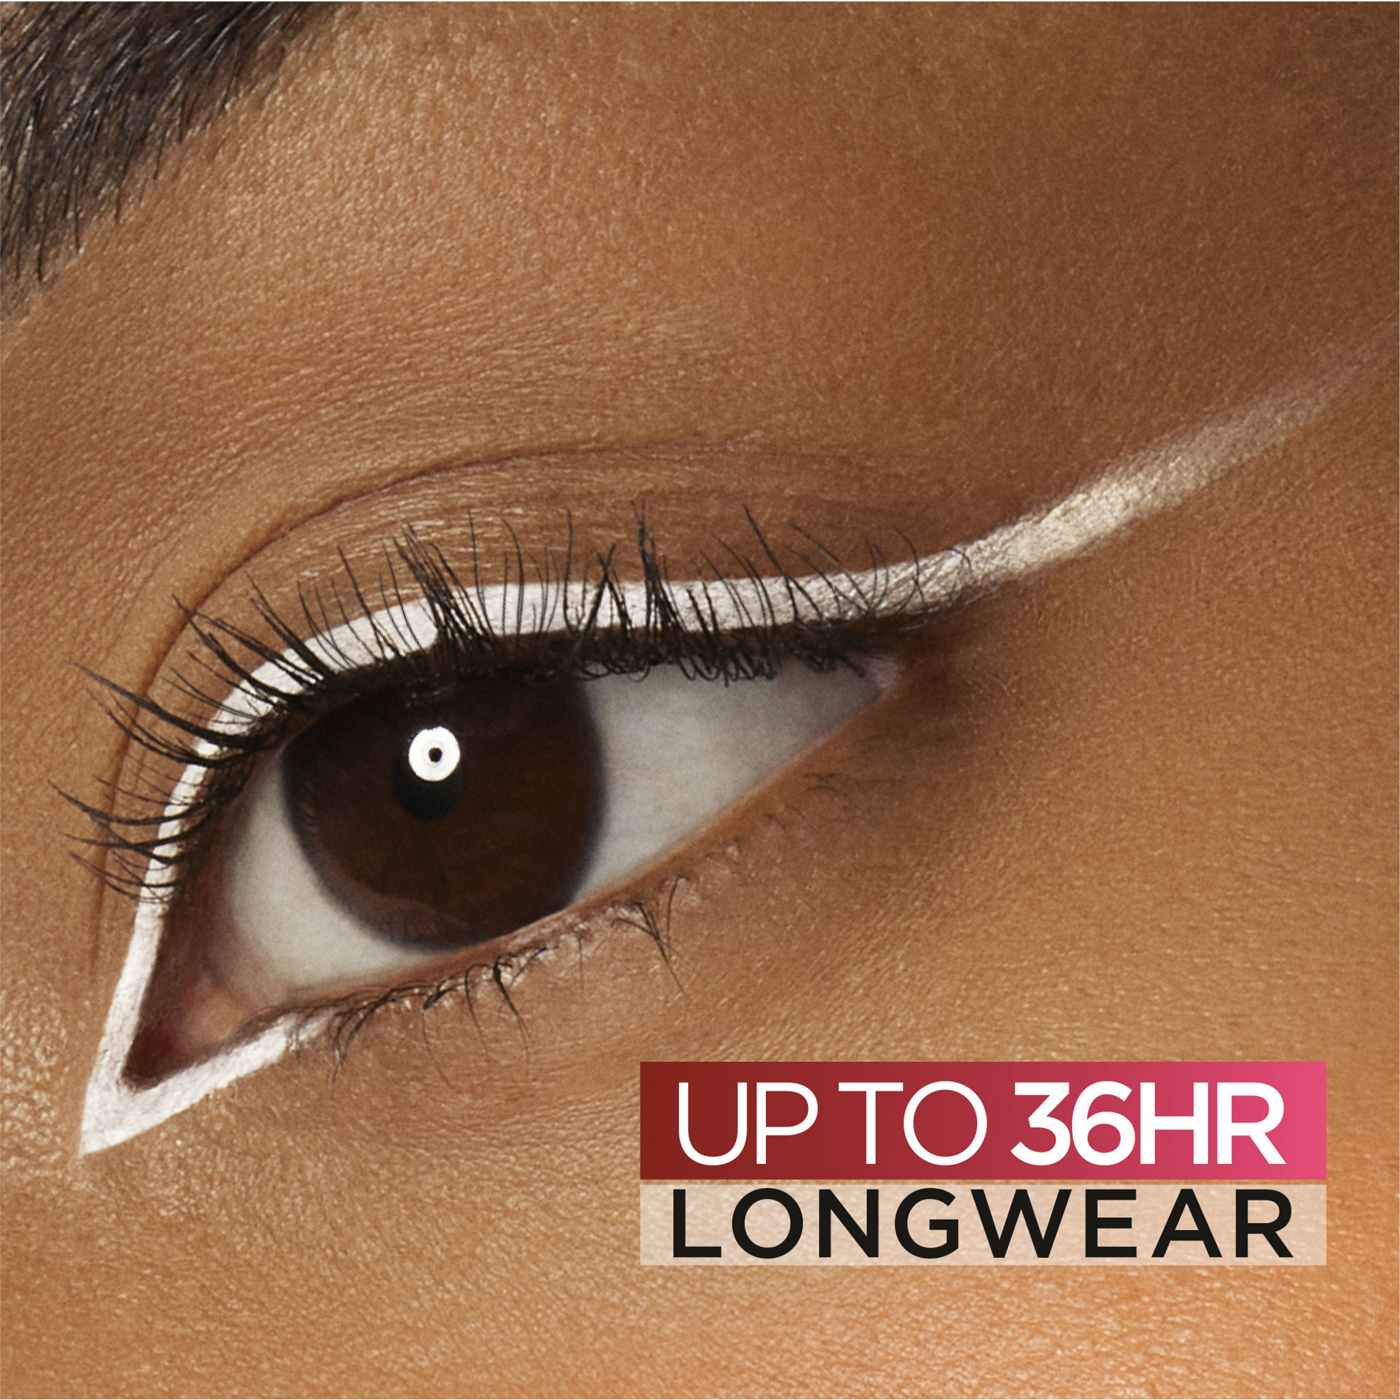 L'Oréal Paris Infallible Grip Mechanical Gel Makeup Eyeliner - Polar White; image 2 of 4